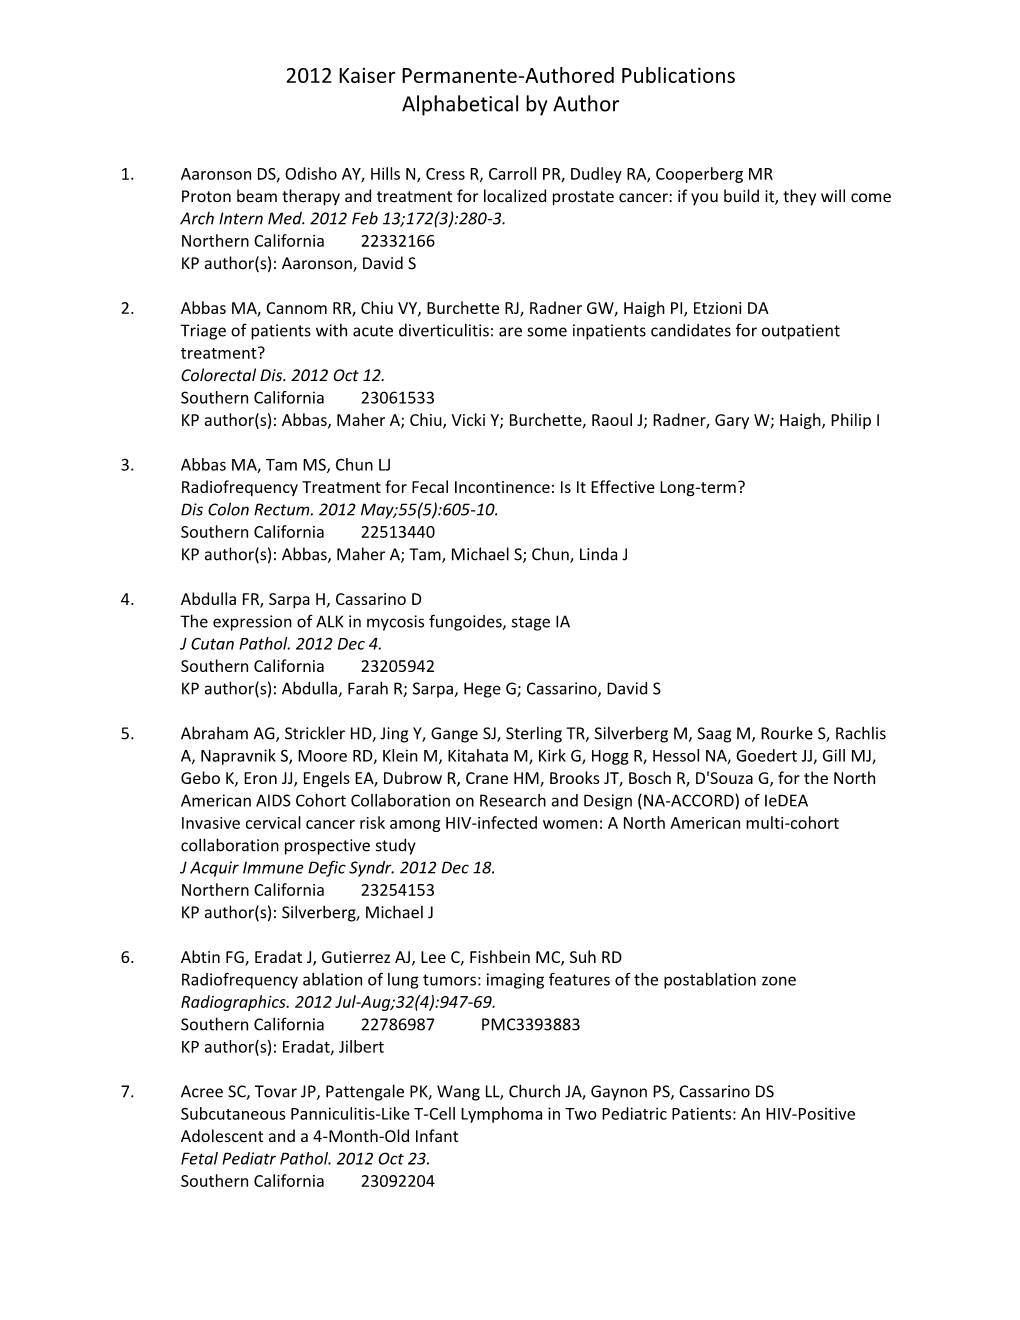 2012 Kaiser Permanente-Authored Publications Alphabetical by Author